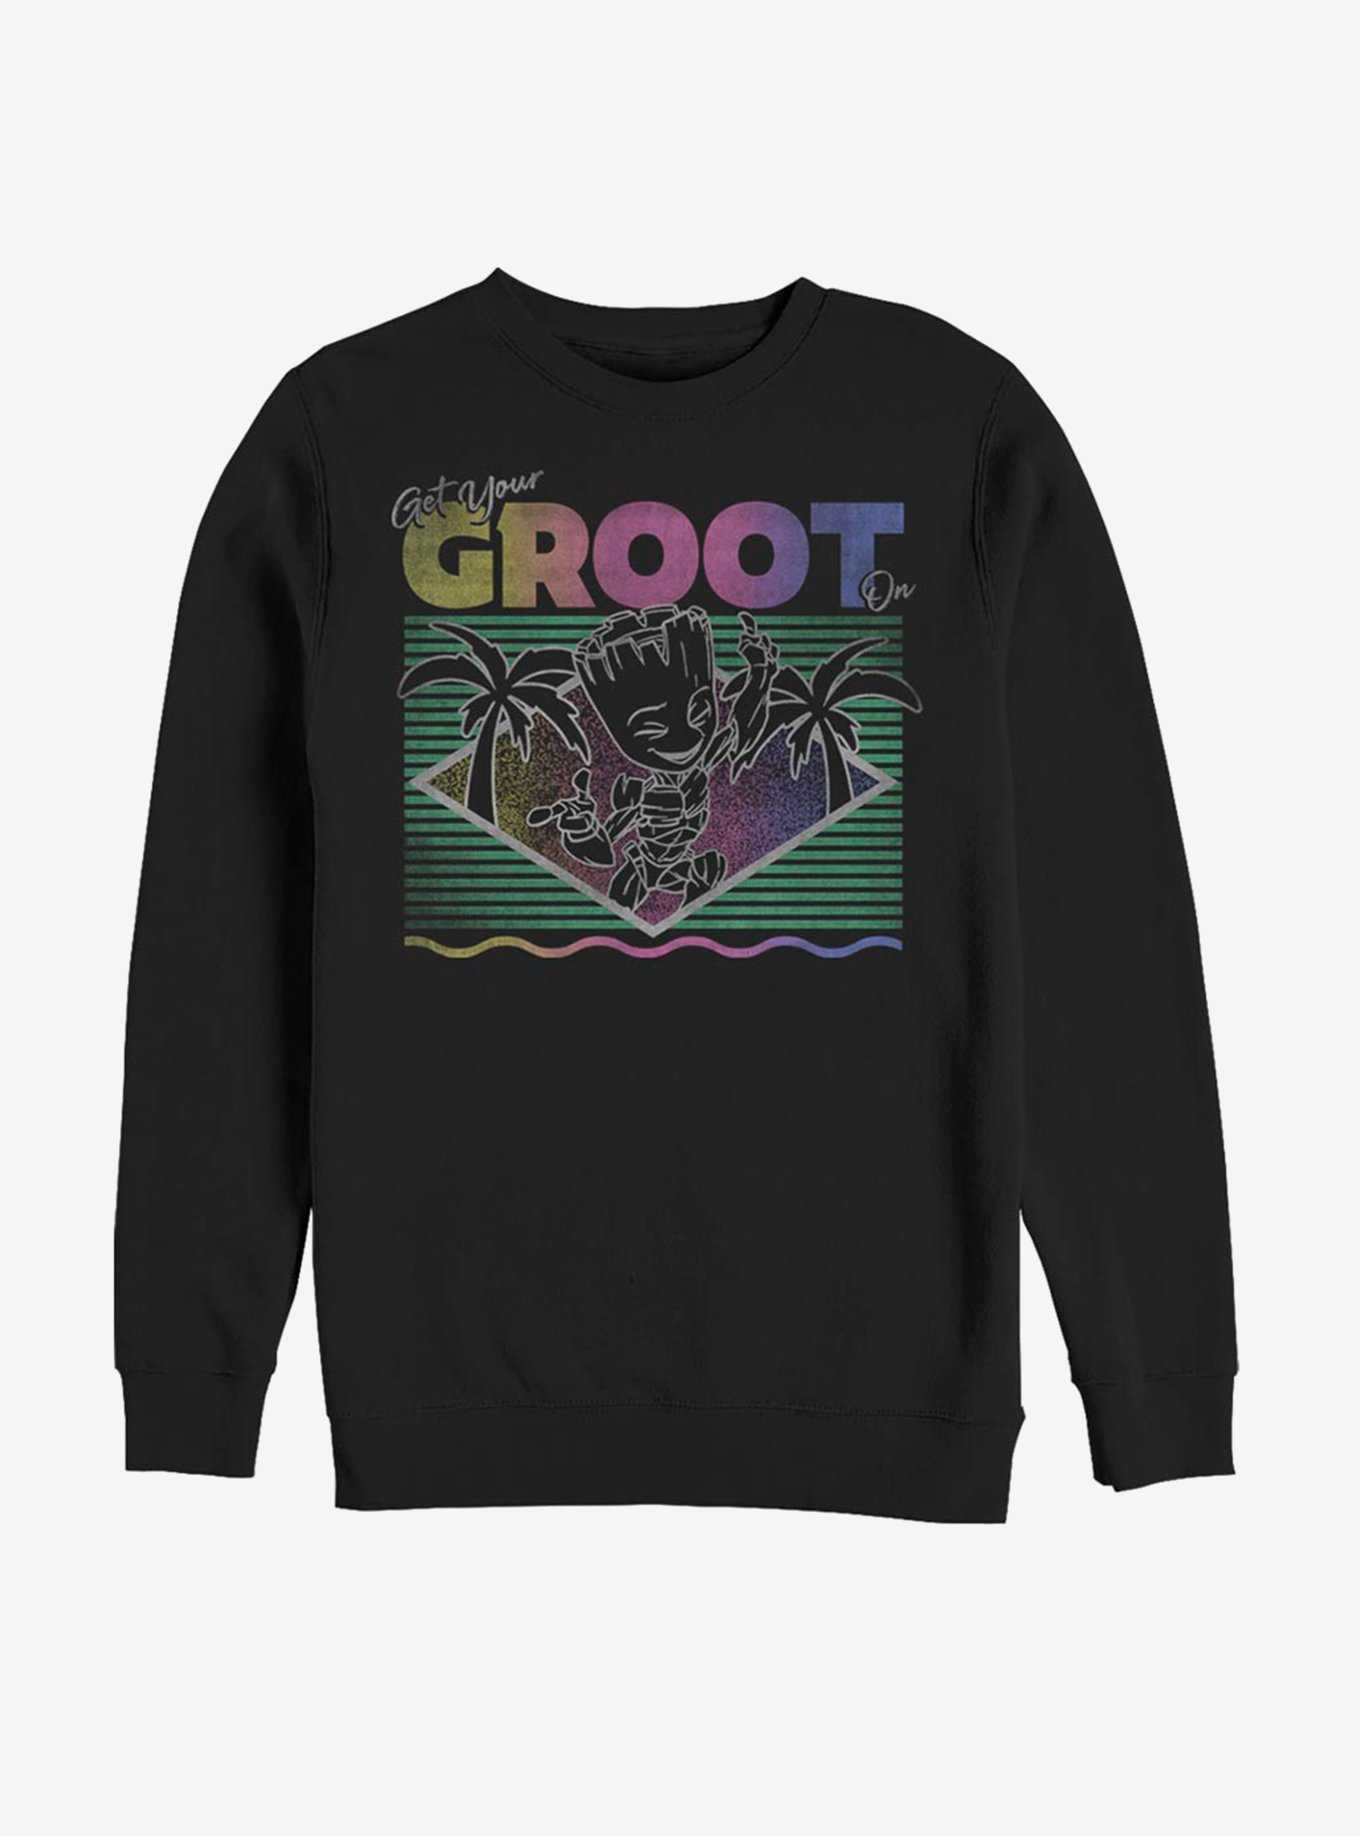 Marvel Guardians Of The Galaxy Get Your Groot On Sweatshirt, , hi-res